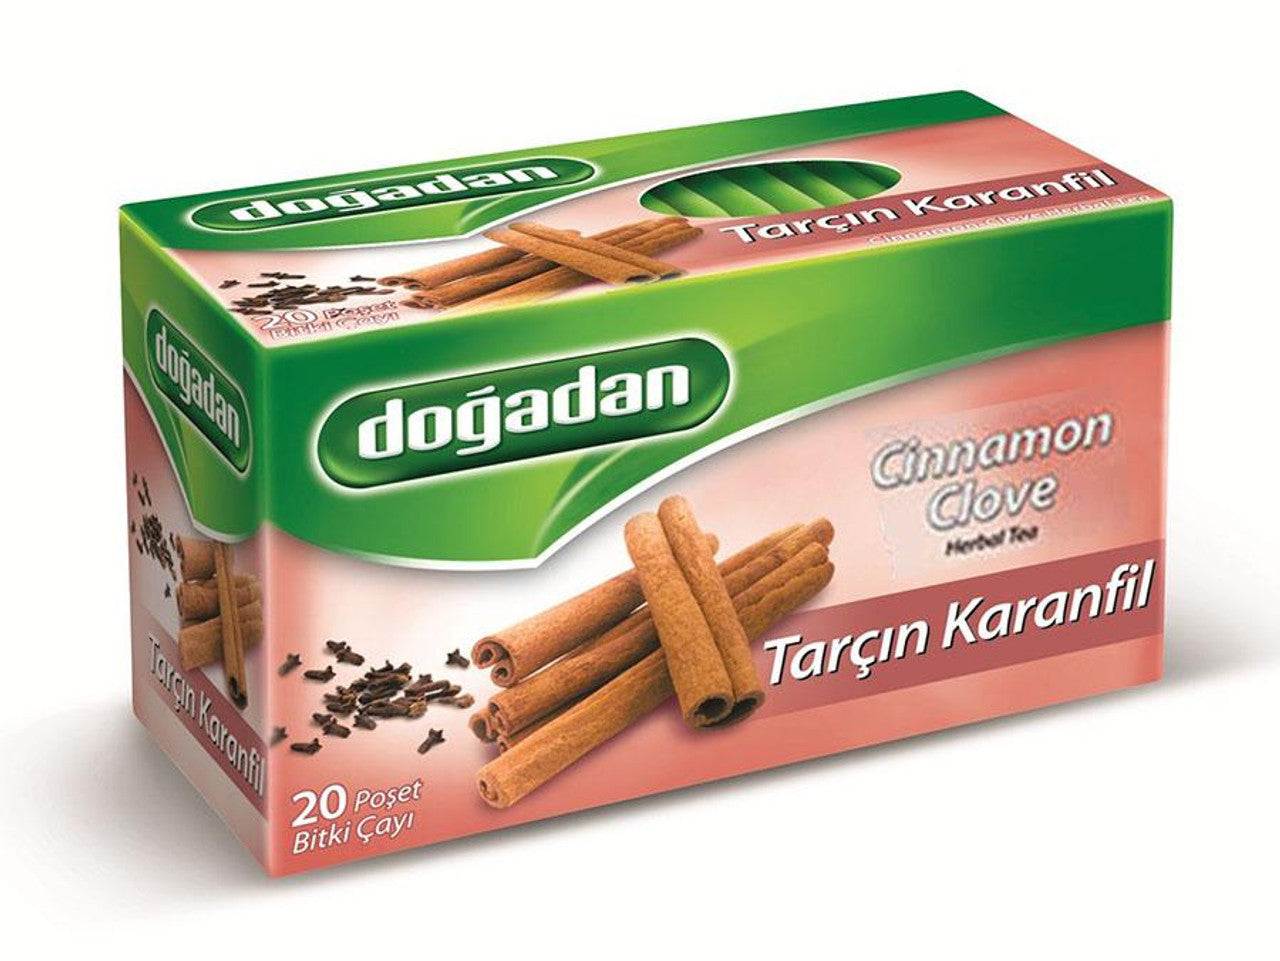 Dogadan Cinnamon and Clove Herbal Tea